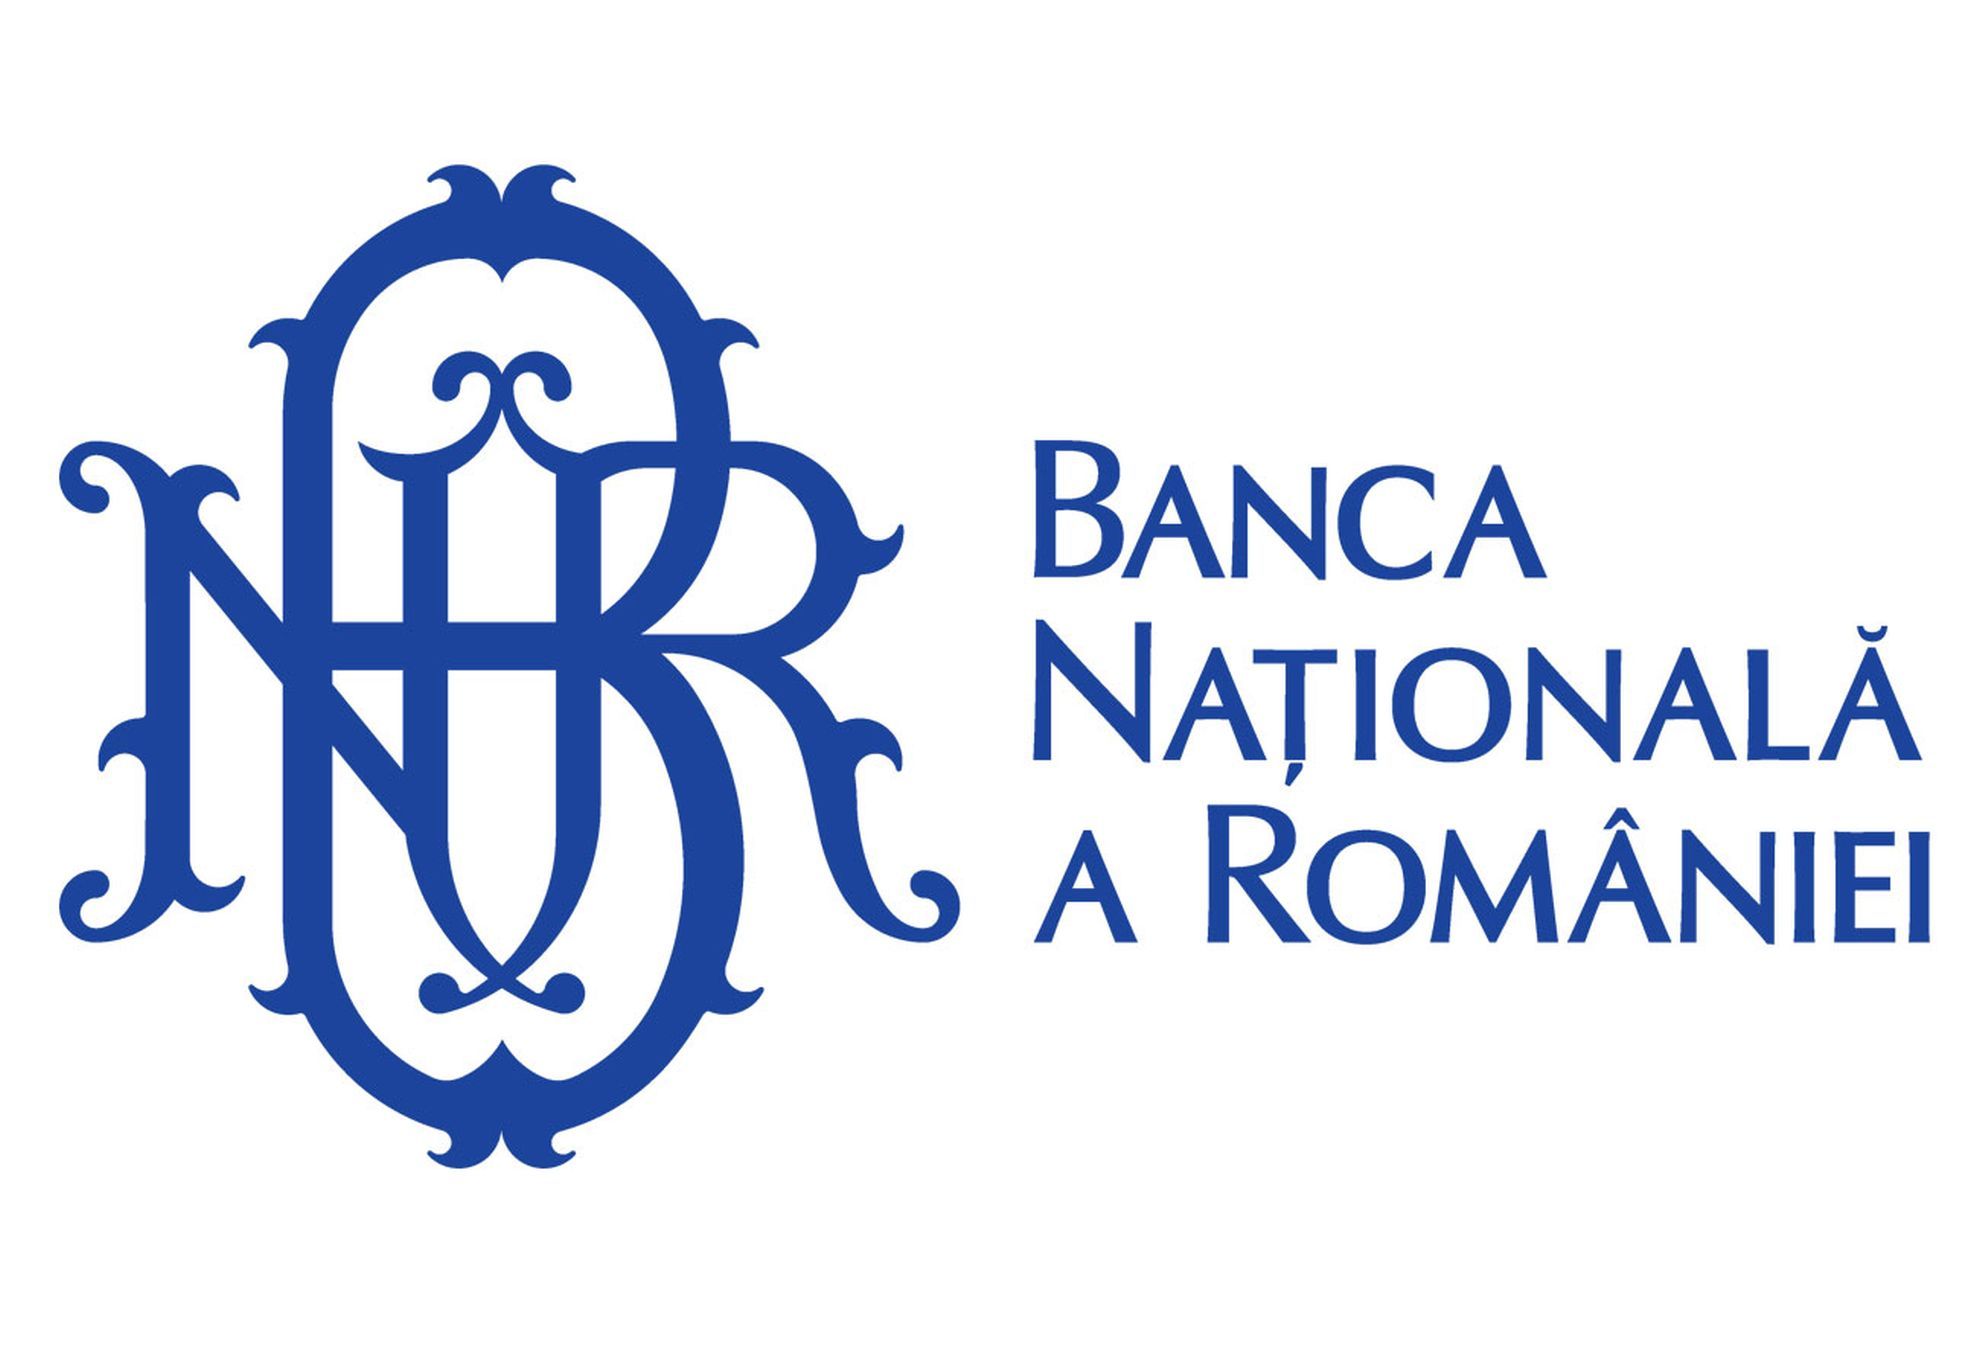 bnb logo